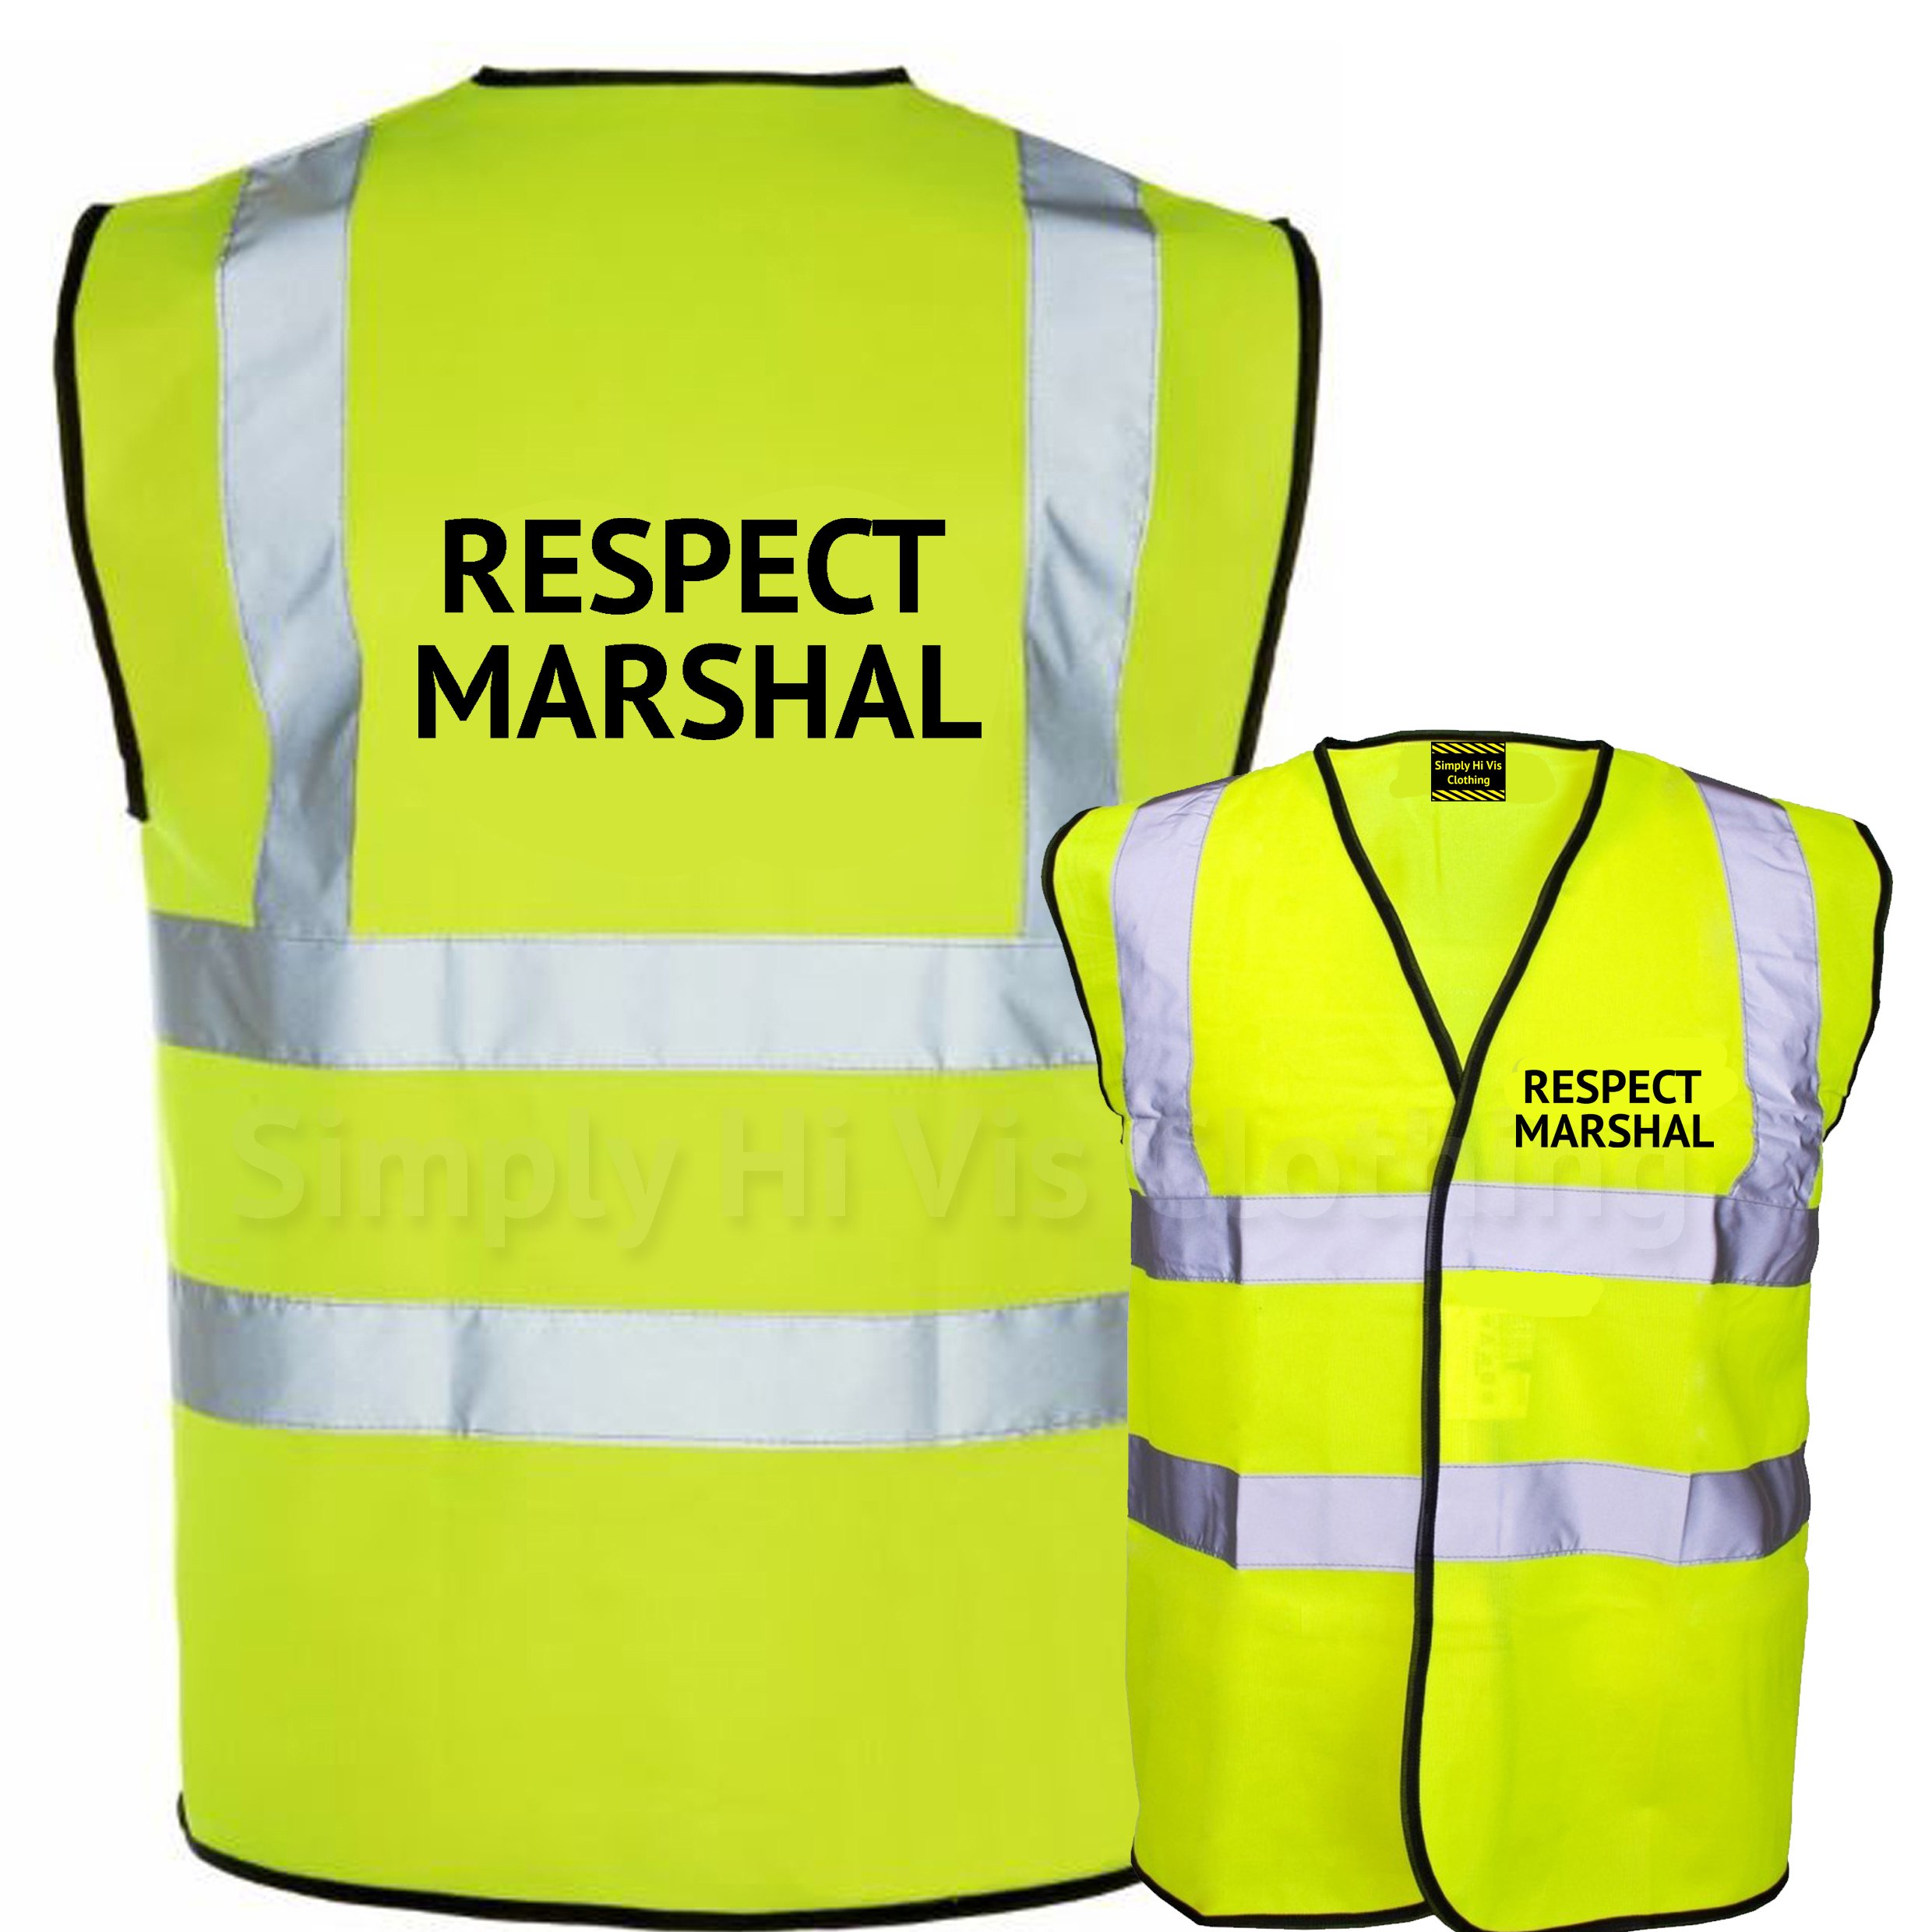 Respect Marshal Yellow_edited-1